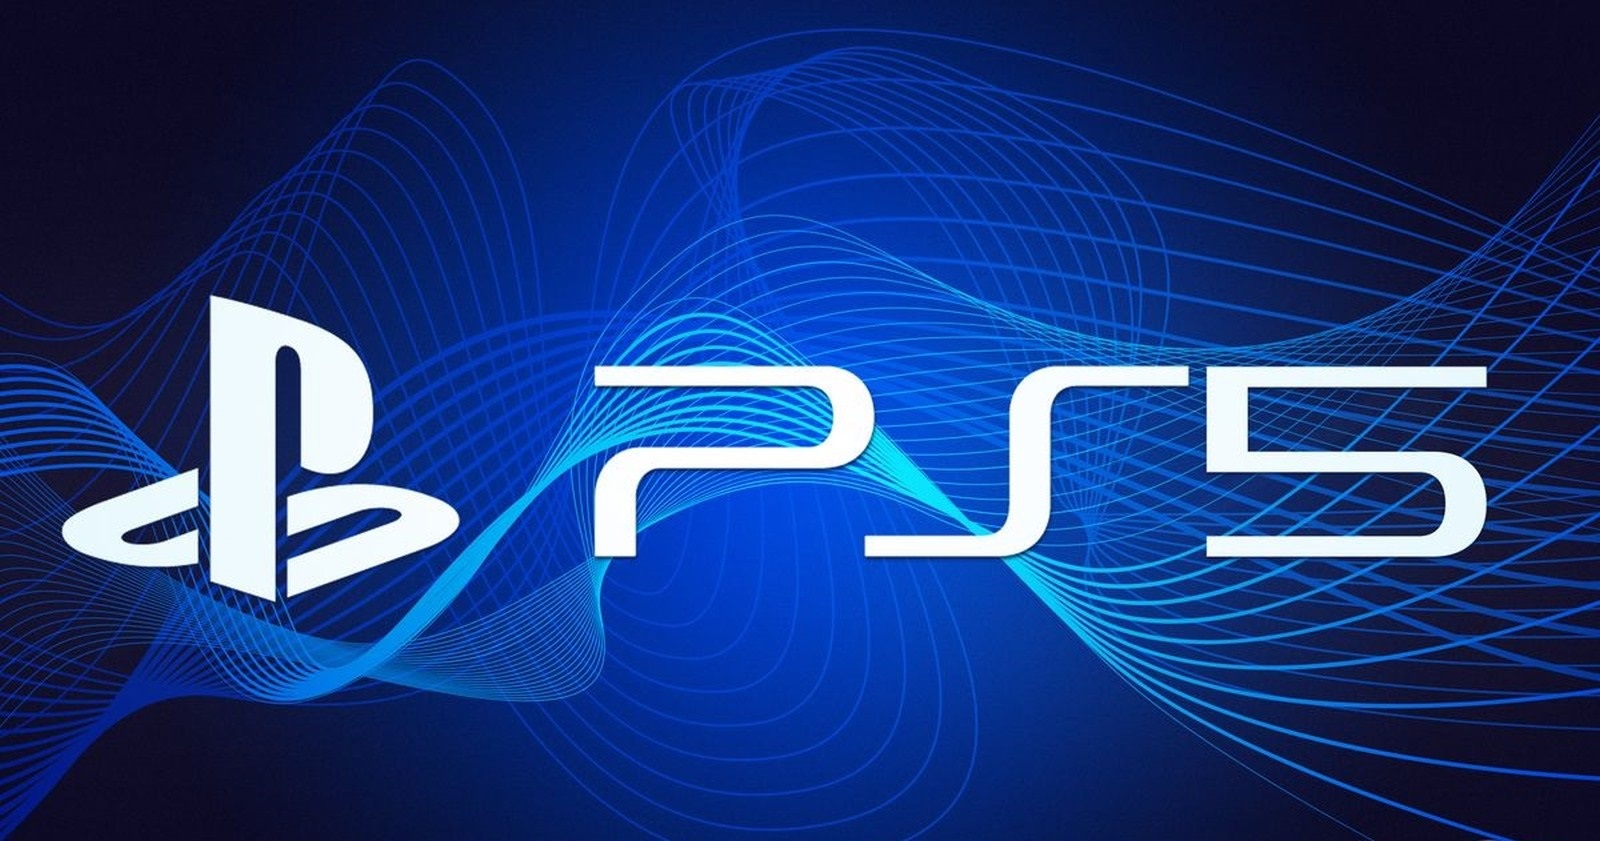 PS5, Sony, logo; screenshot: